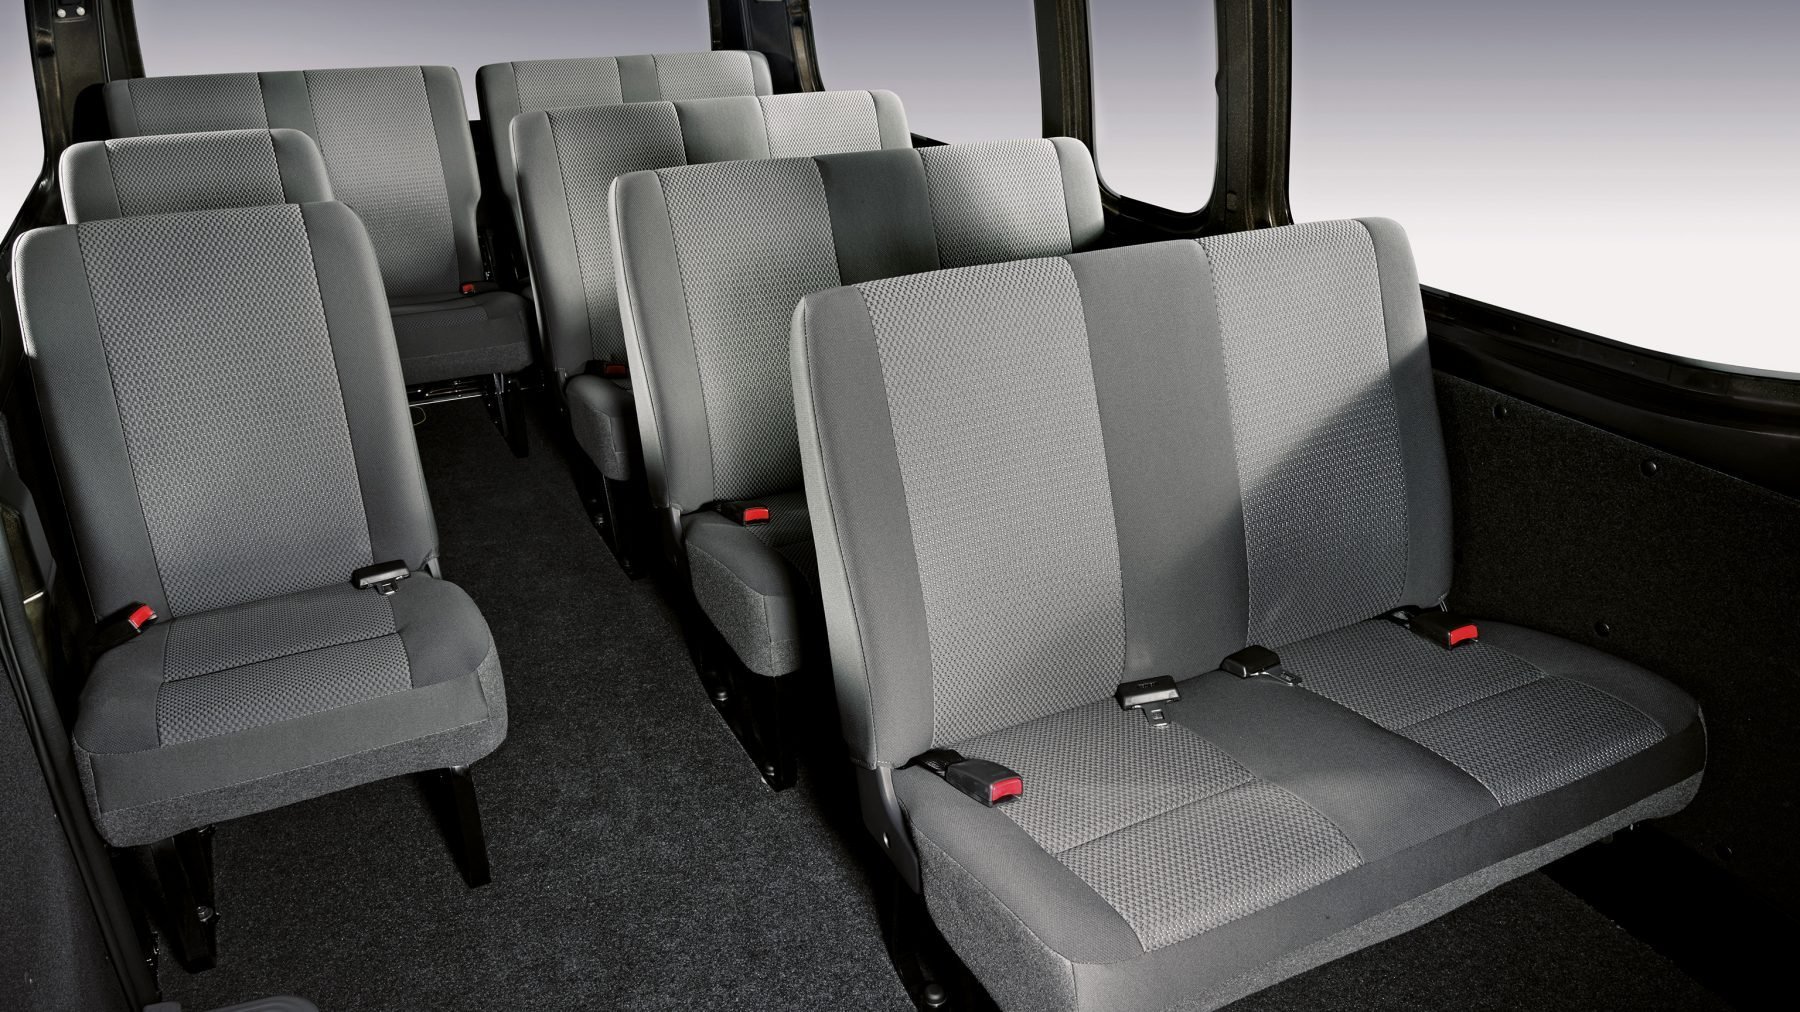 Nissan Urvan interior - Seats